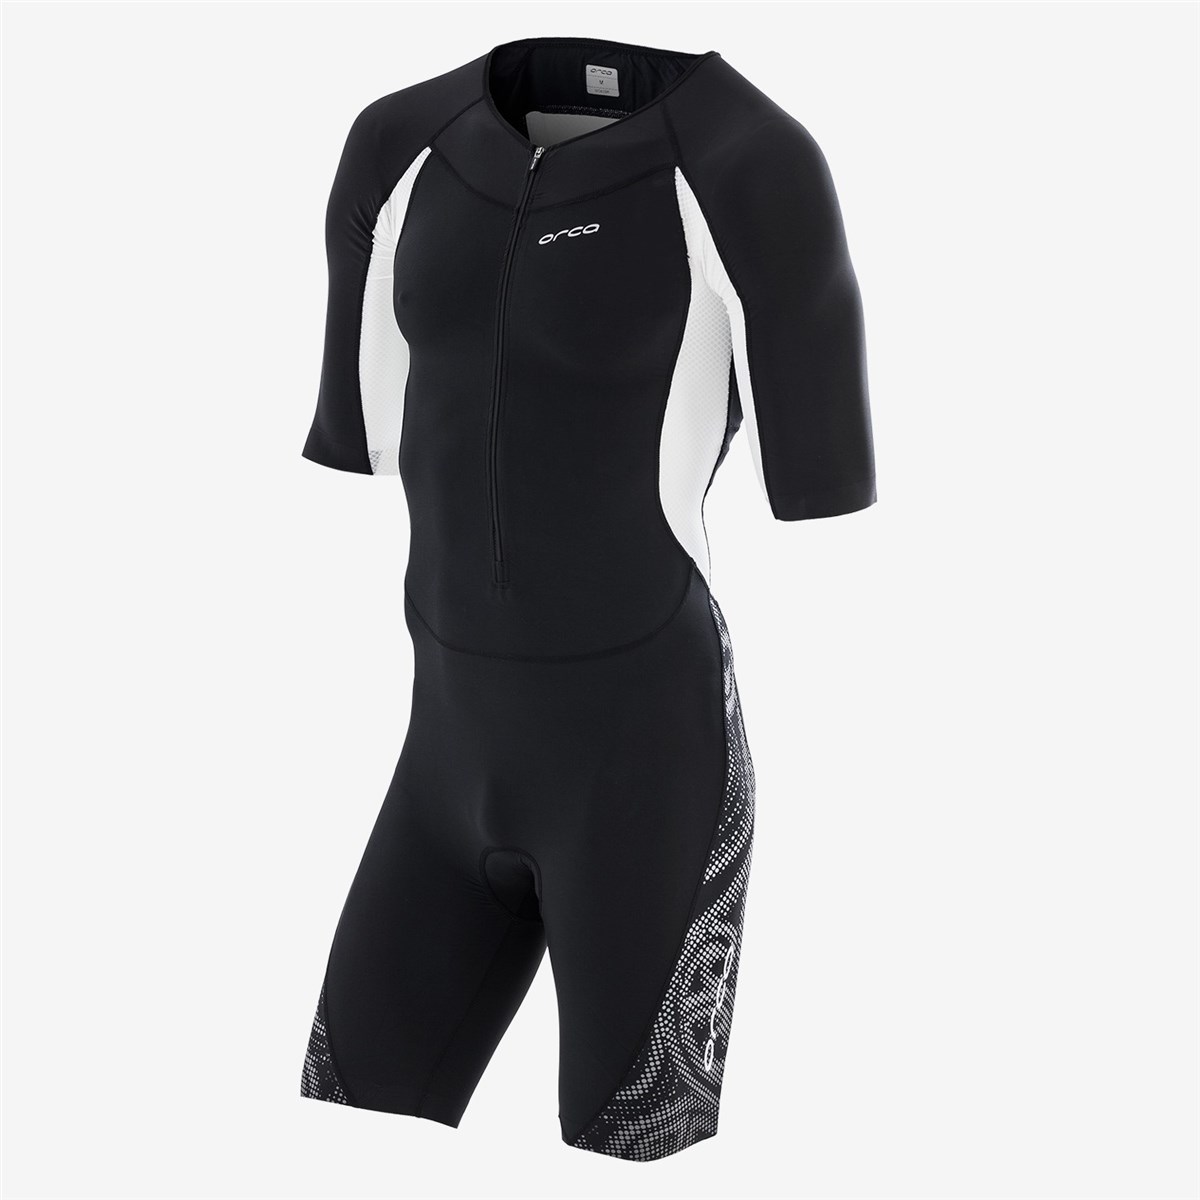 Orca 226 Short Sleeve Race Suit product image